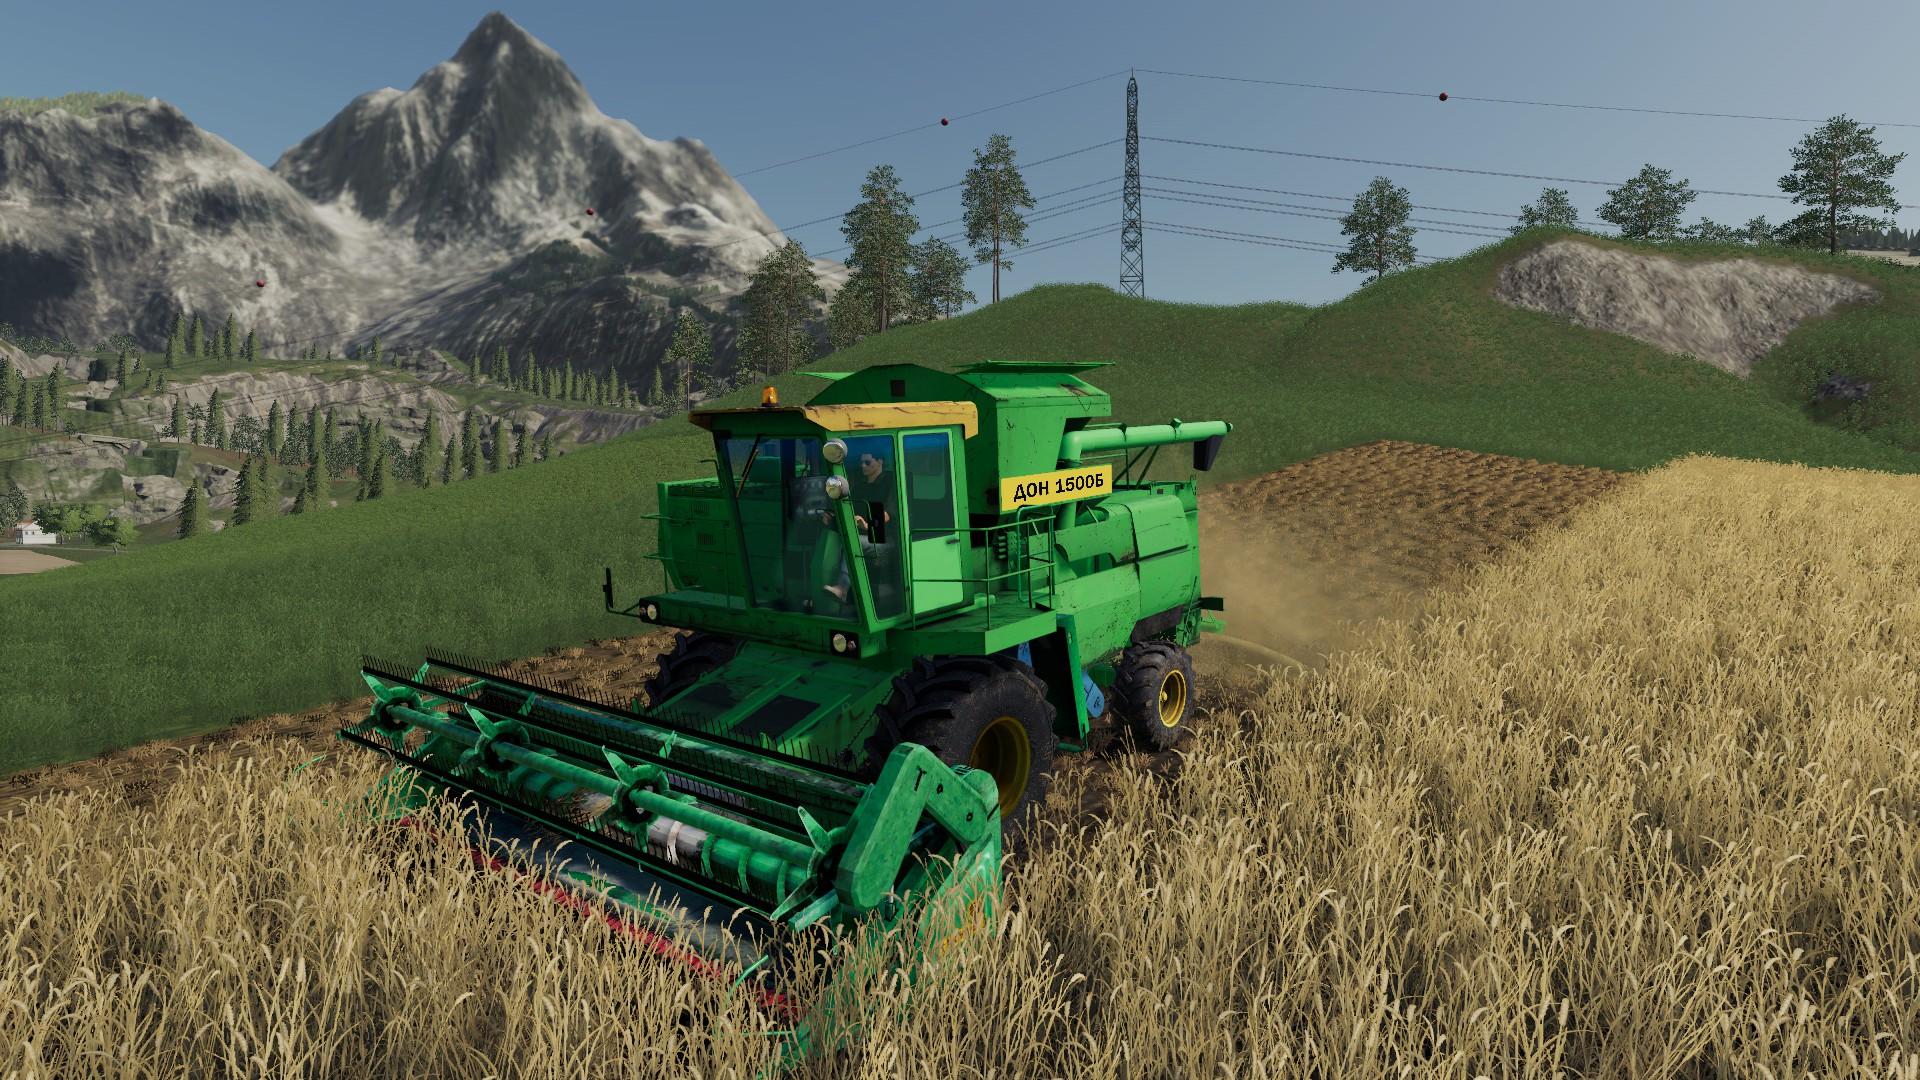 Игры ферма симулятор 19. FS 19 Дон 1500. Farming Simulator 19. Дон 1500б для ФС 19. Дон-1500б fs22.